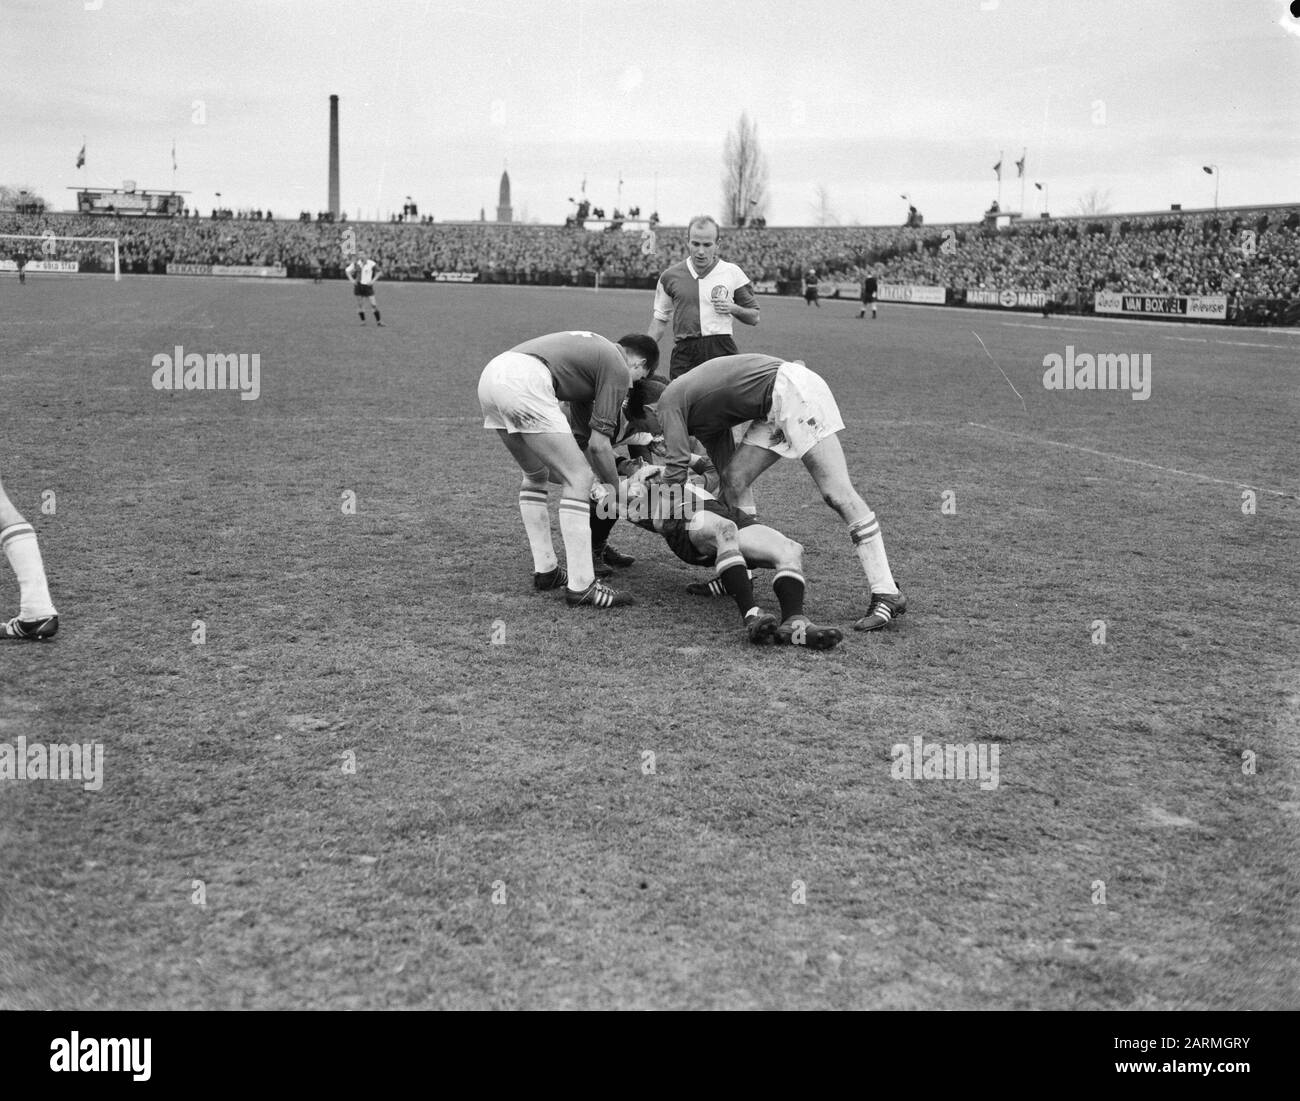 Willem II vs. Feyenoord, Coen Moulijn injured Date: 26 February 1961 Location: Tilburg Keywords: sport, football Personal name: Moulijn, Coen Institution name: Feyenoord, Willem II Stock Photo